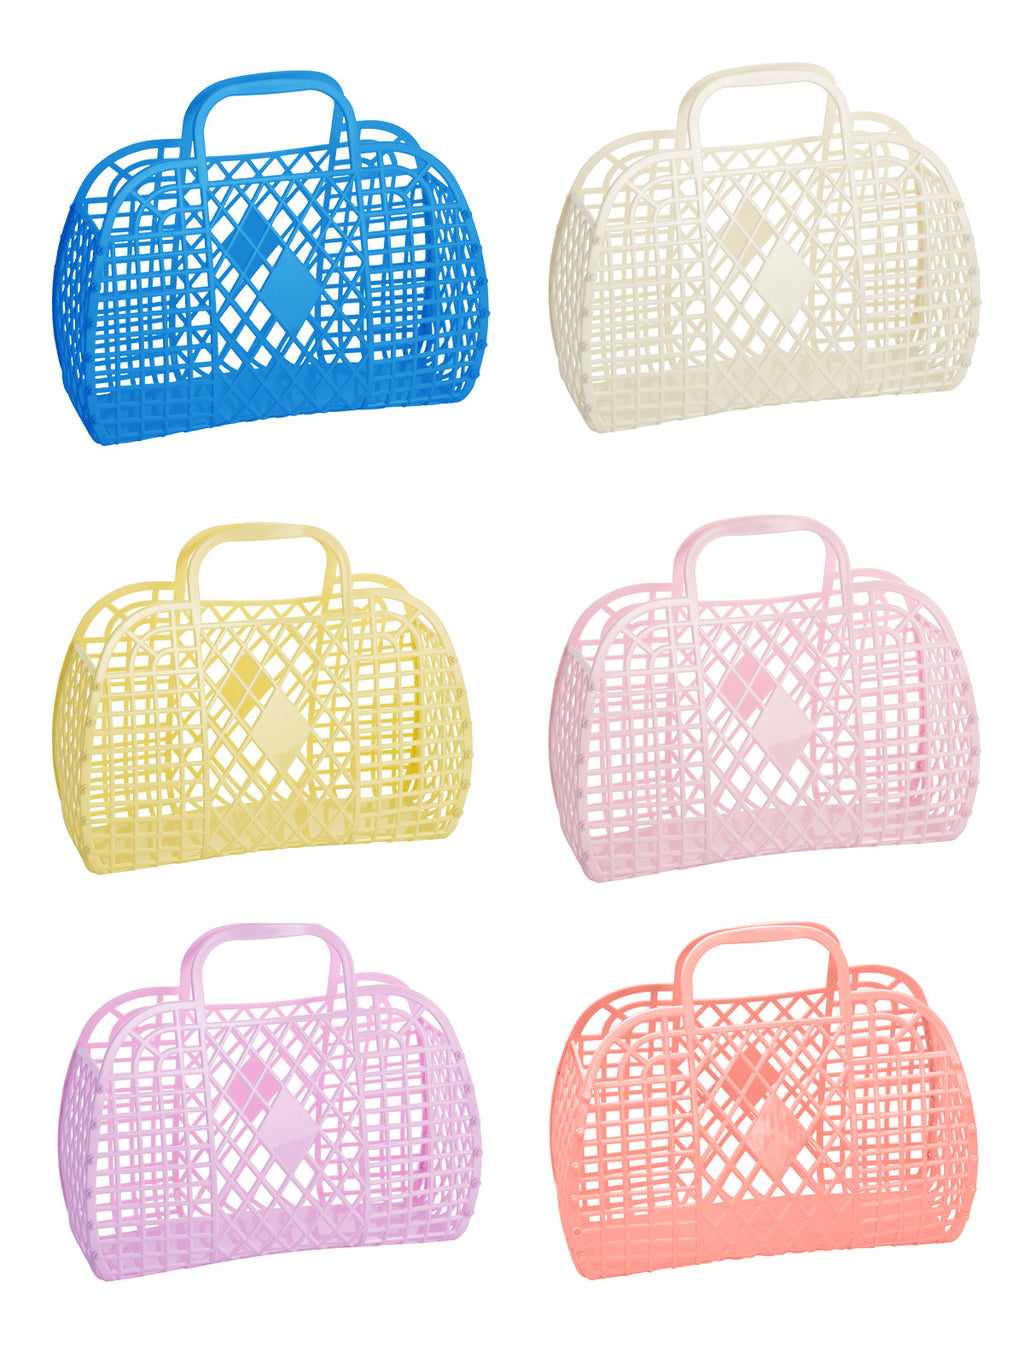 Jellies Retro Basket Jelly Bag - Large